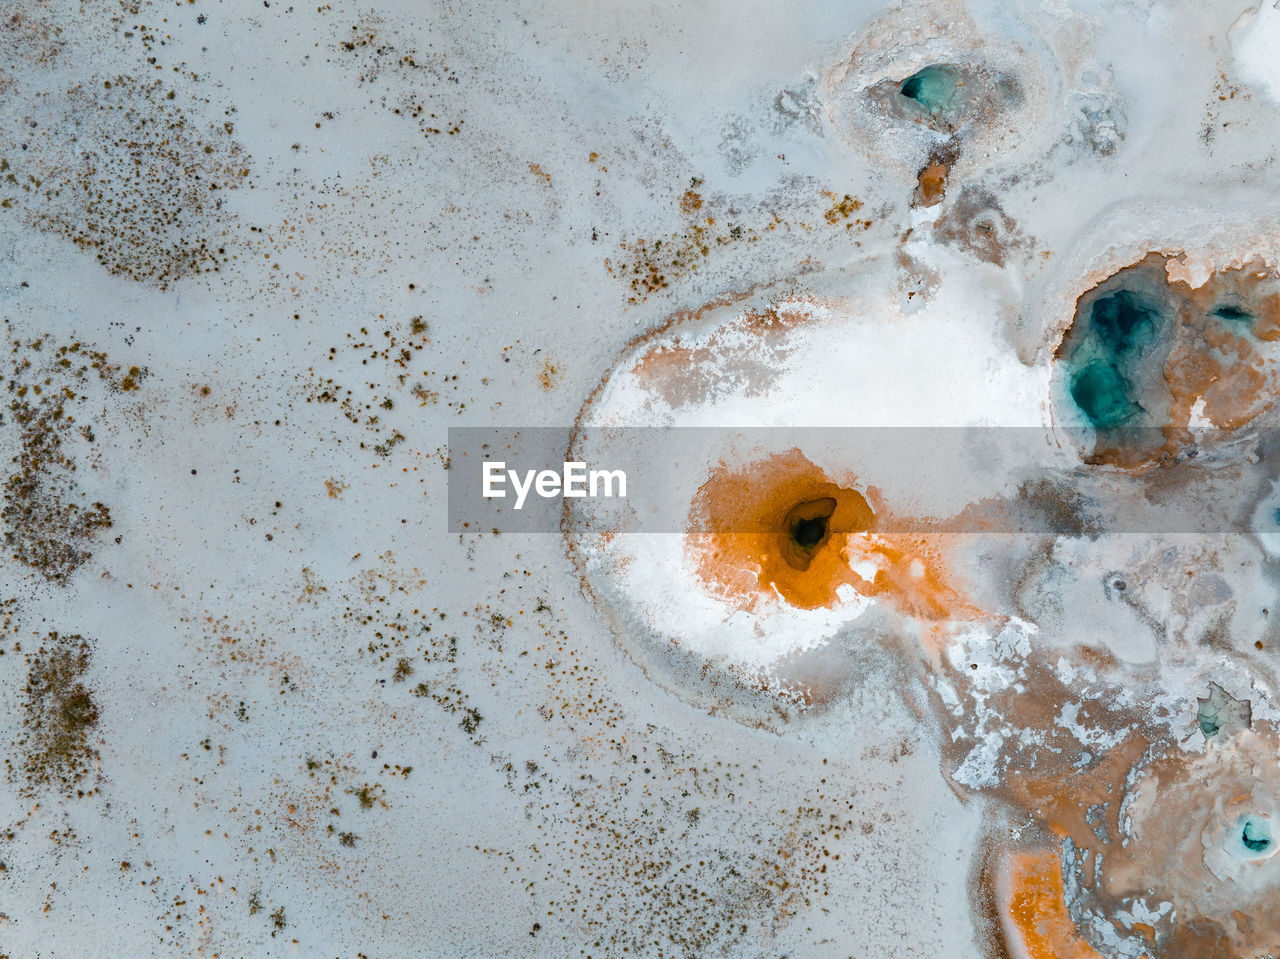 Upper geyser basin of yellowstone national park, wyoming